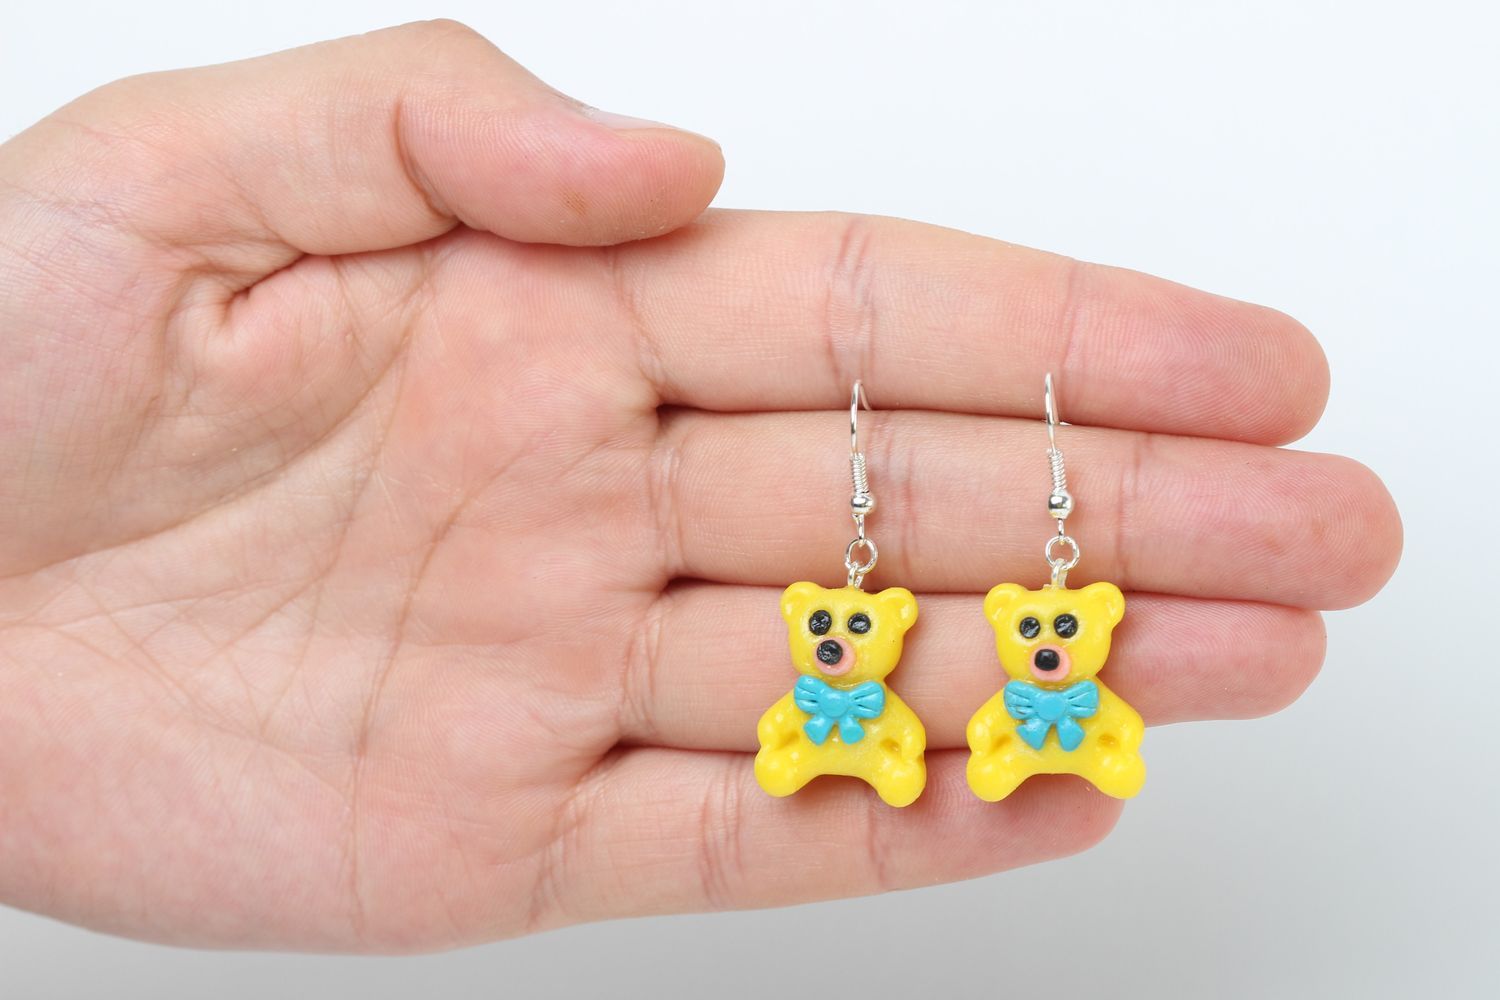 Handmade designer earrings stylish dangling earrings jewelry for kids photo 5